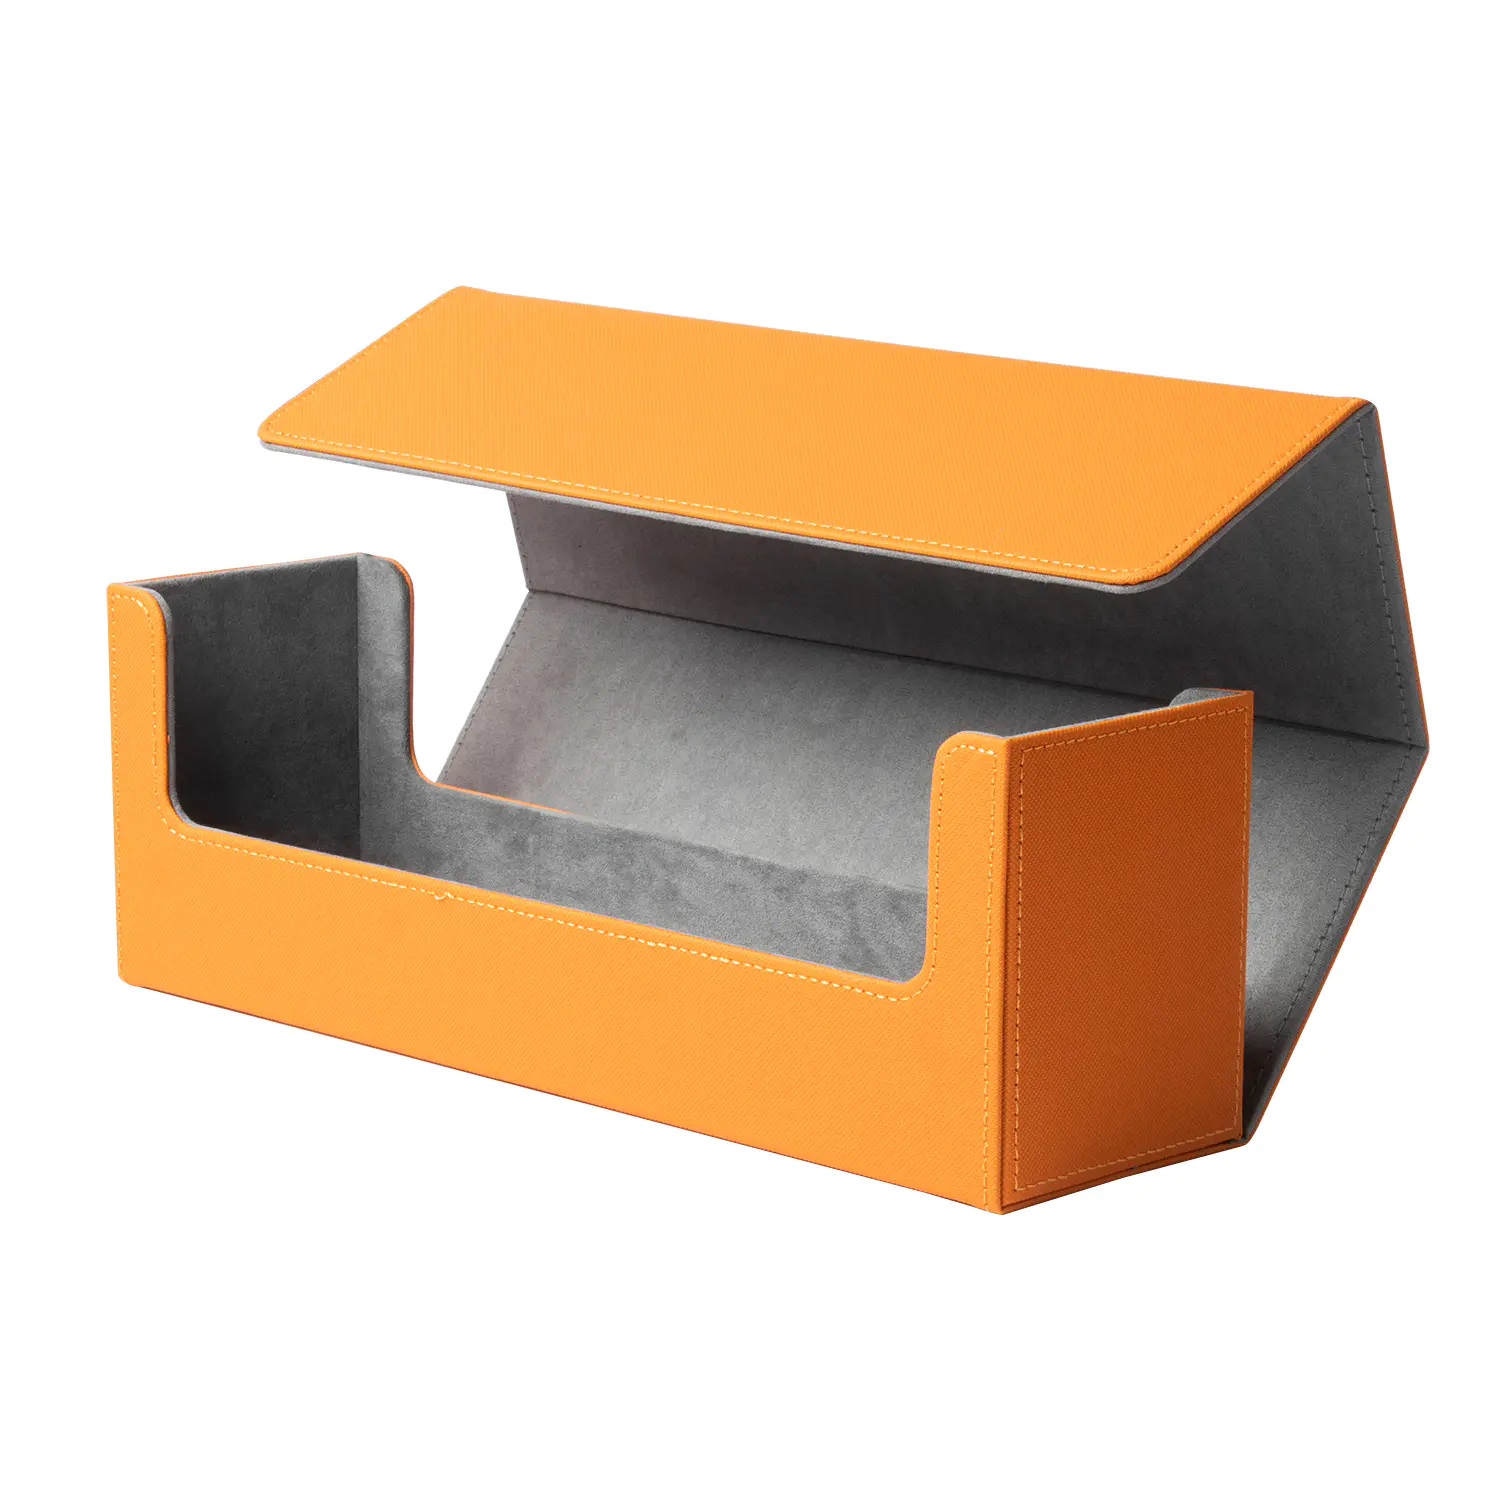 MTG Desk Box 400 Card Desk Box Коробка для хранения карт Магнитная палуба Box PU Кожаная палубная коробка- оранжевый